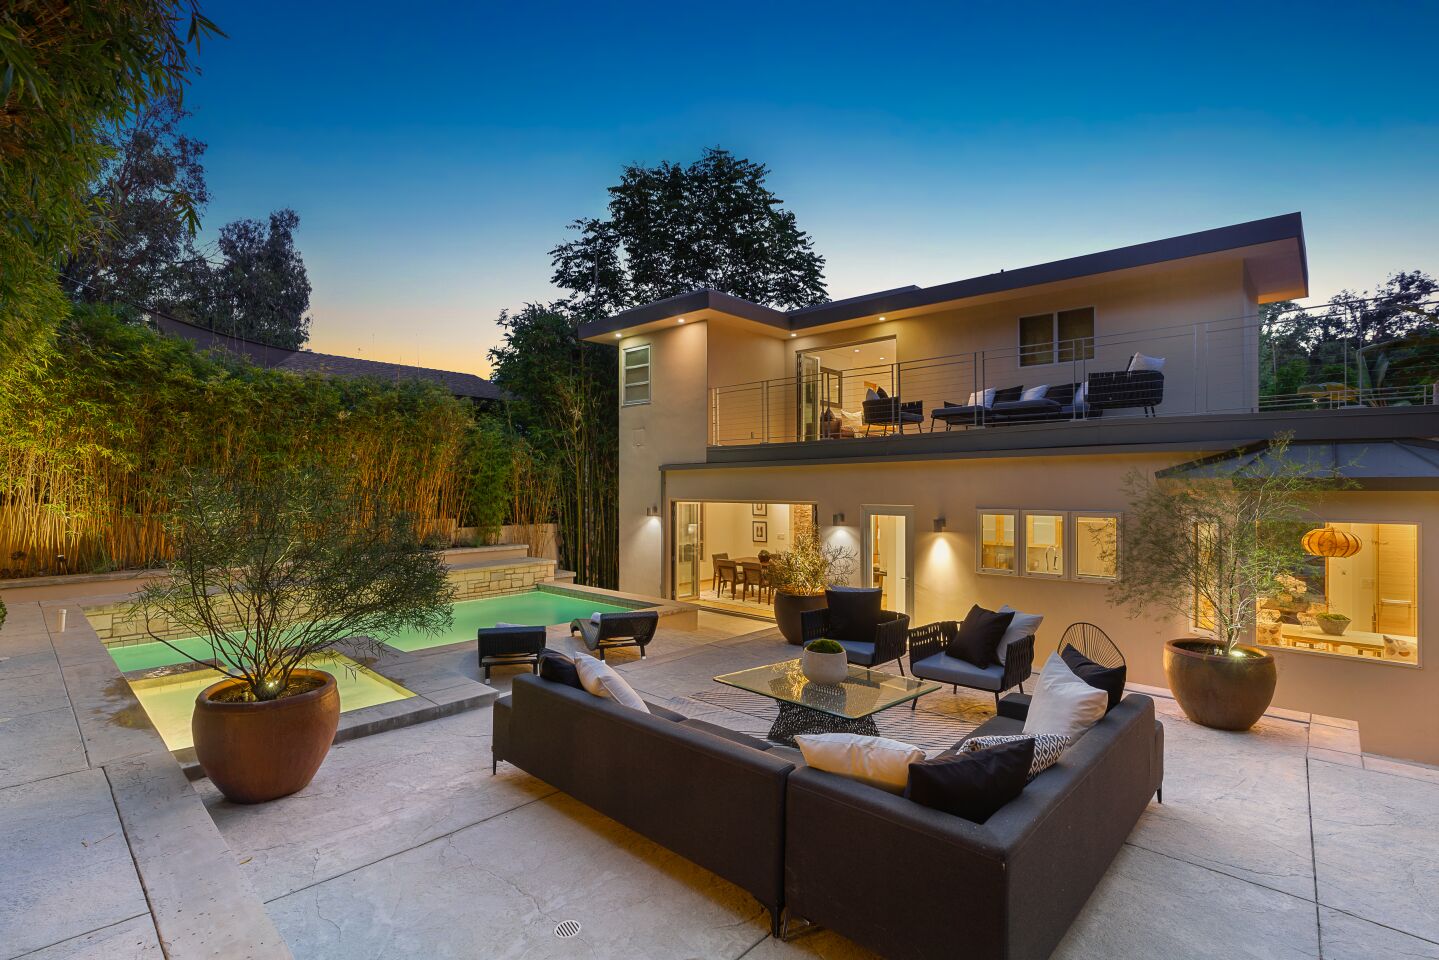 Josh Lucas' Hollywood Hills home